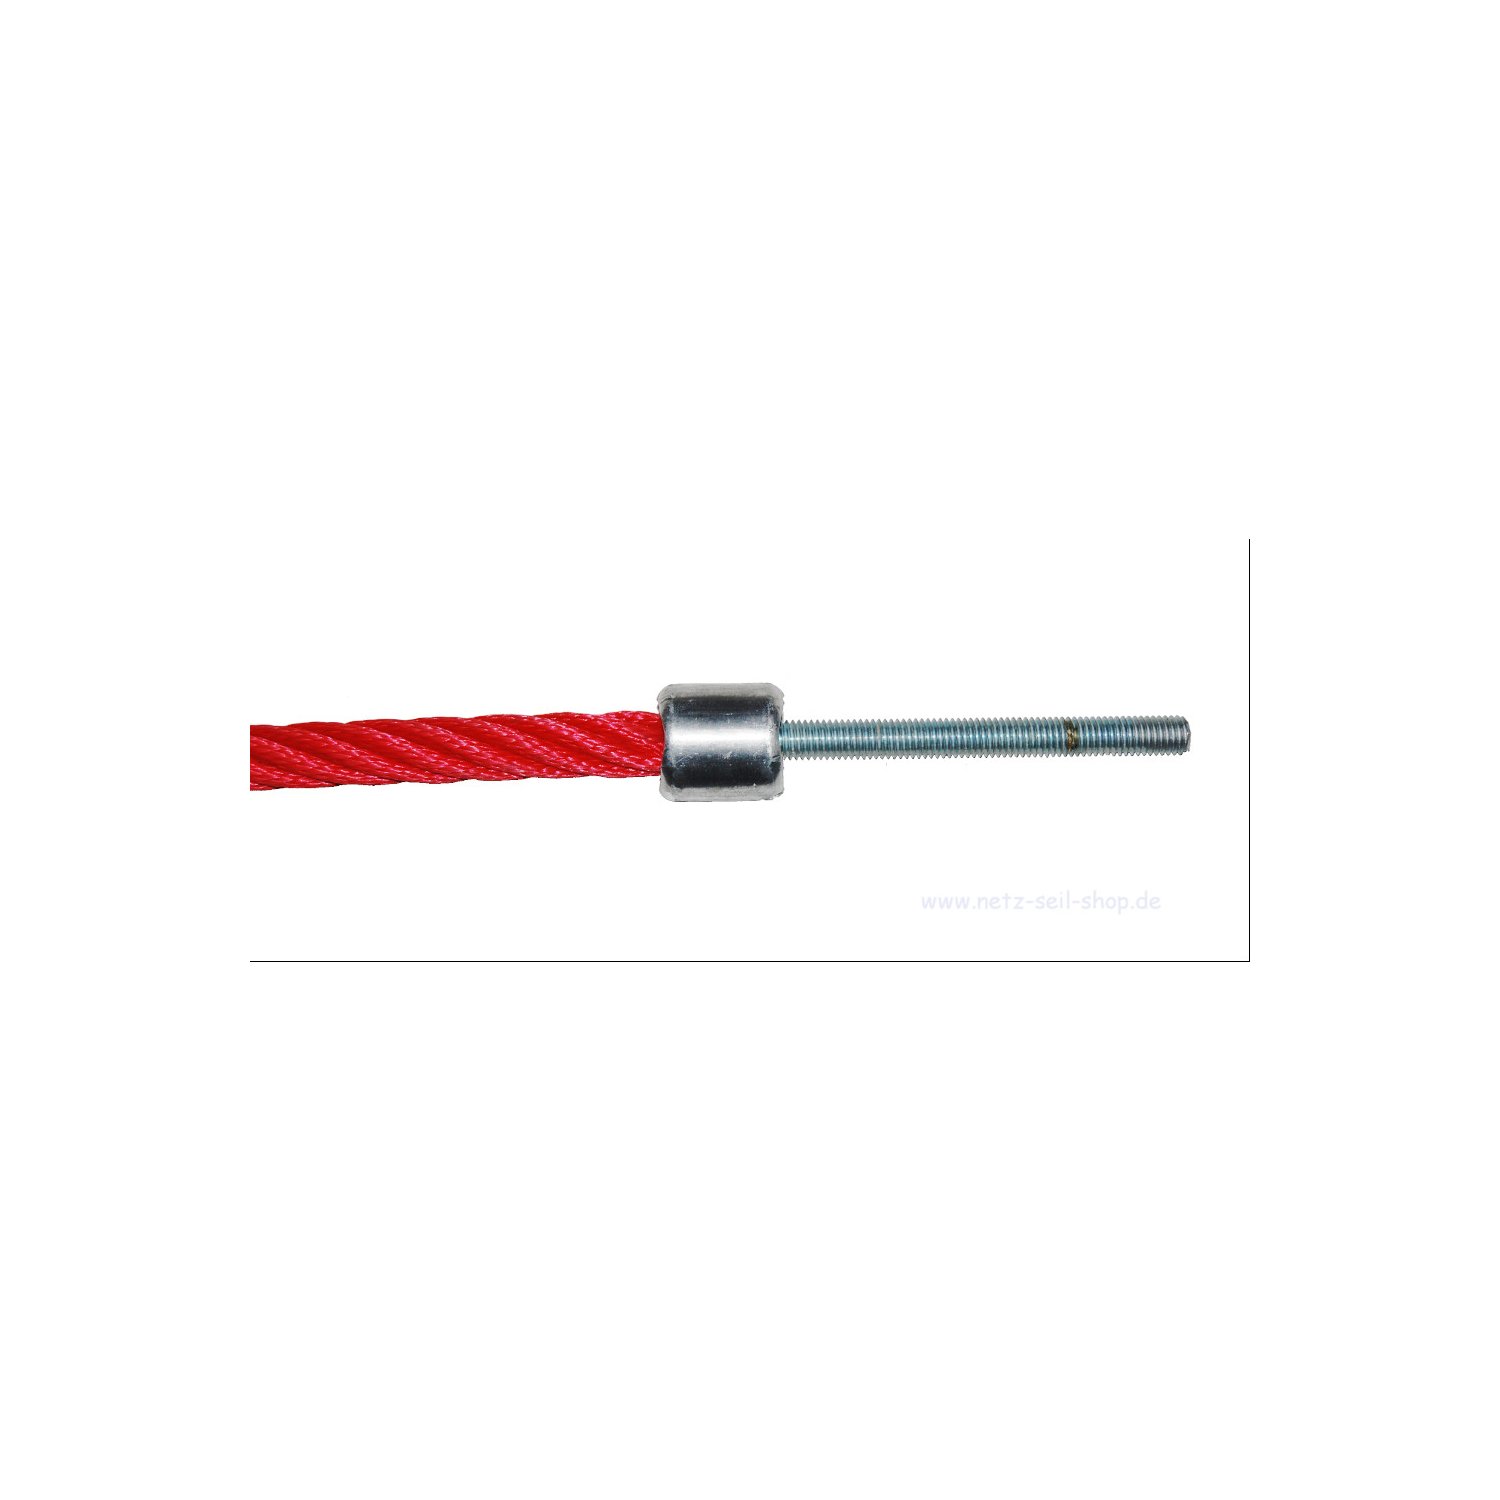 Threaded bolt M12x160 mm galvanized [5,90 EUR]